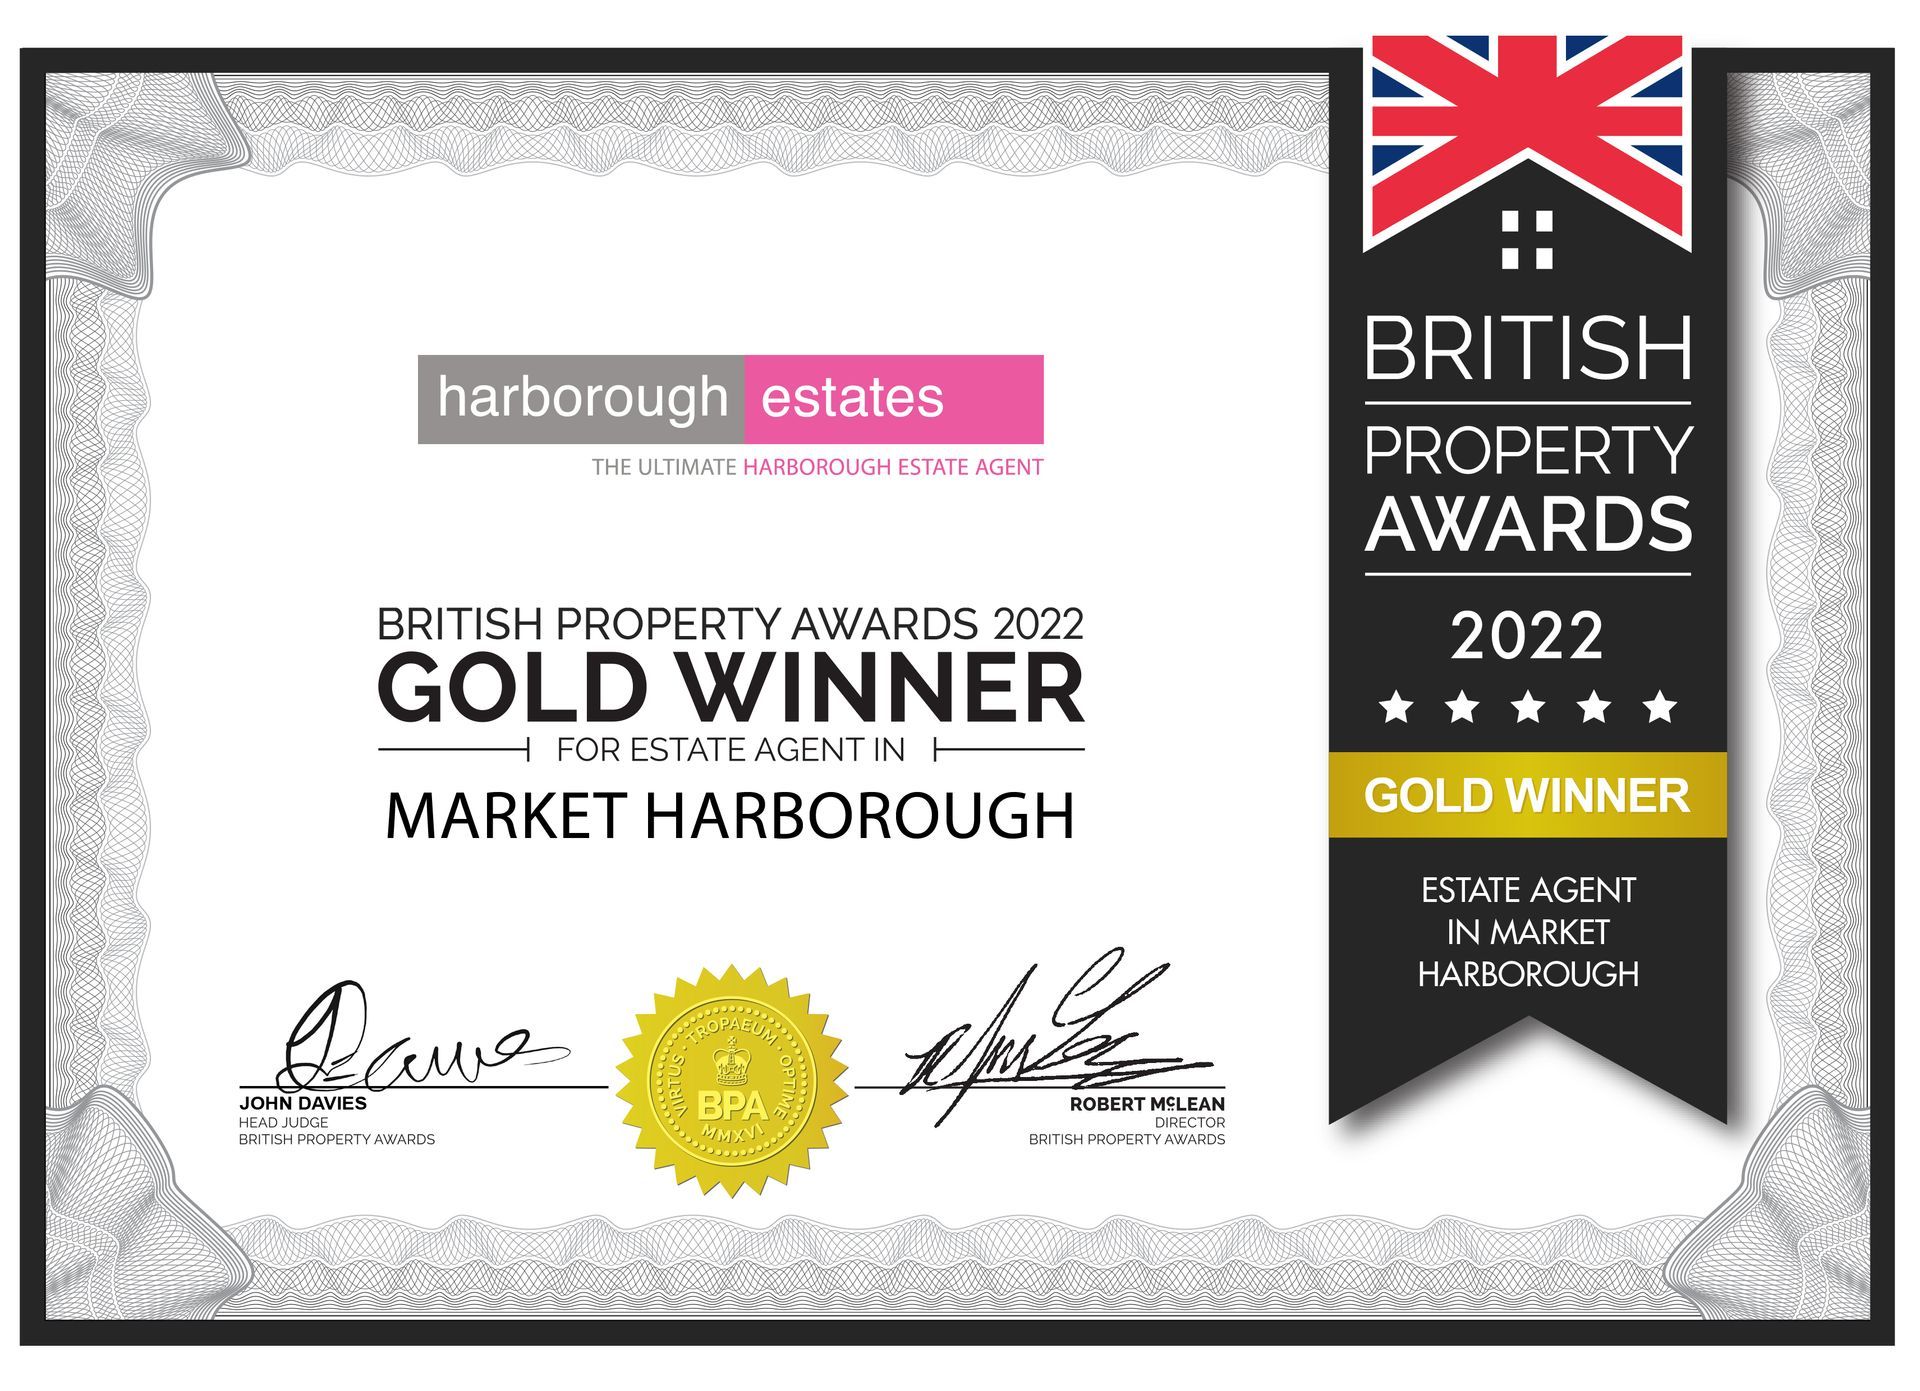 Estate Agents in Market Harborough | British Property Awards 2022 Market Harborough